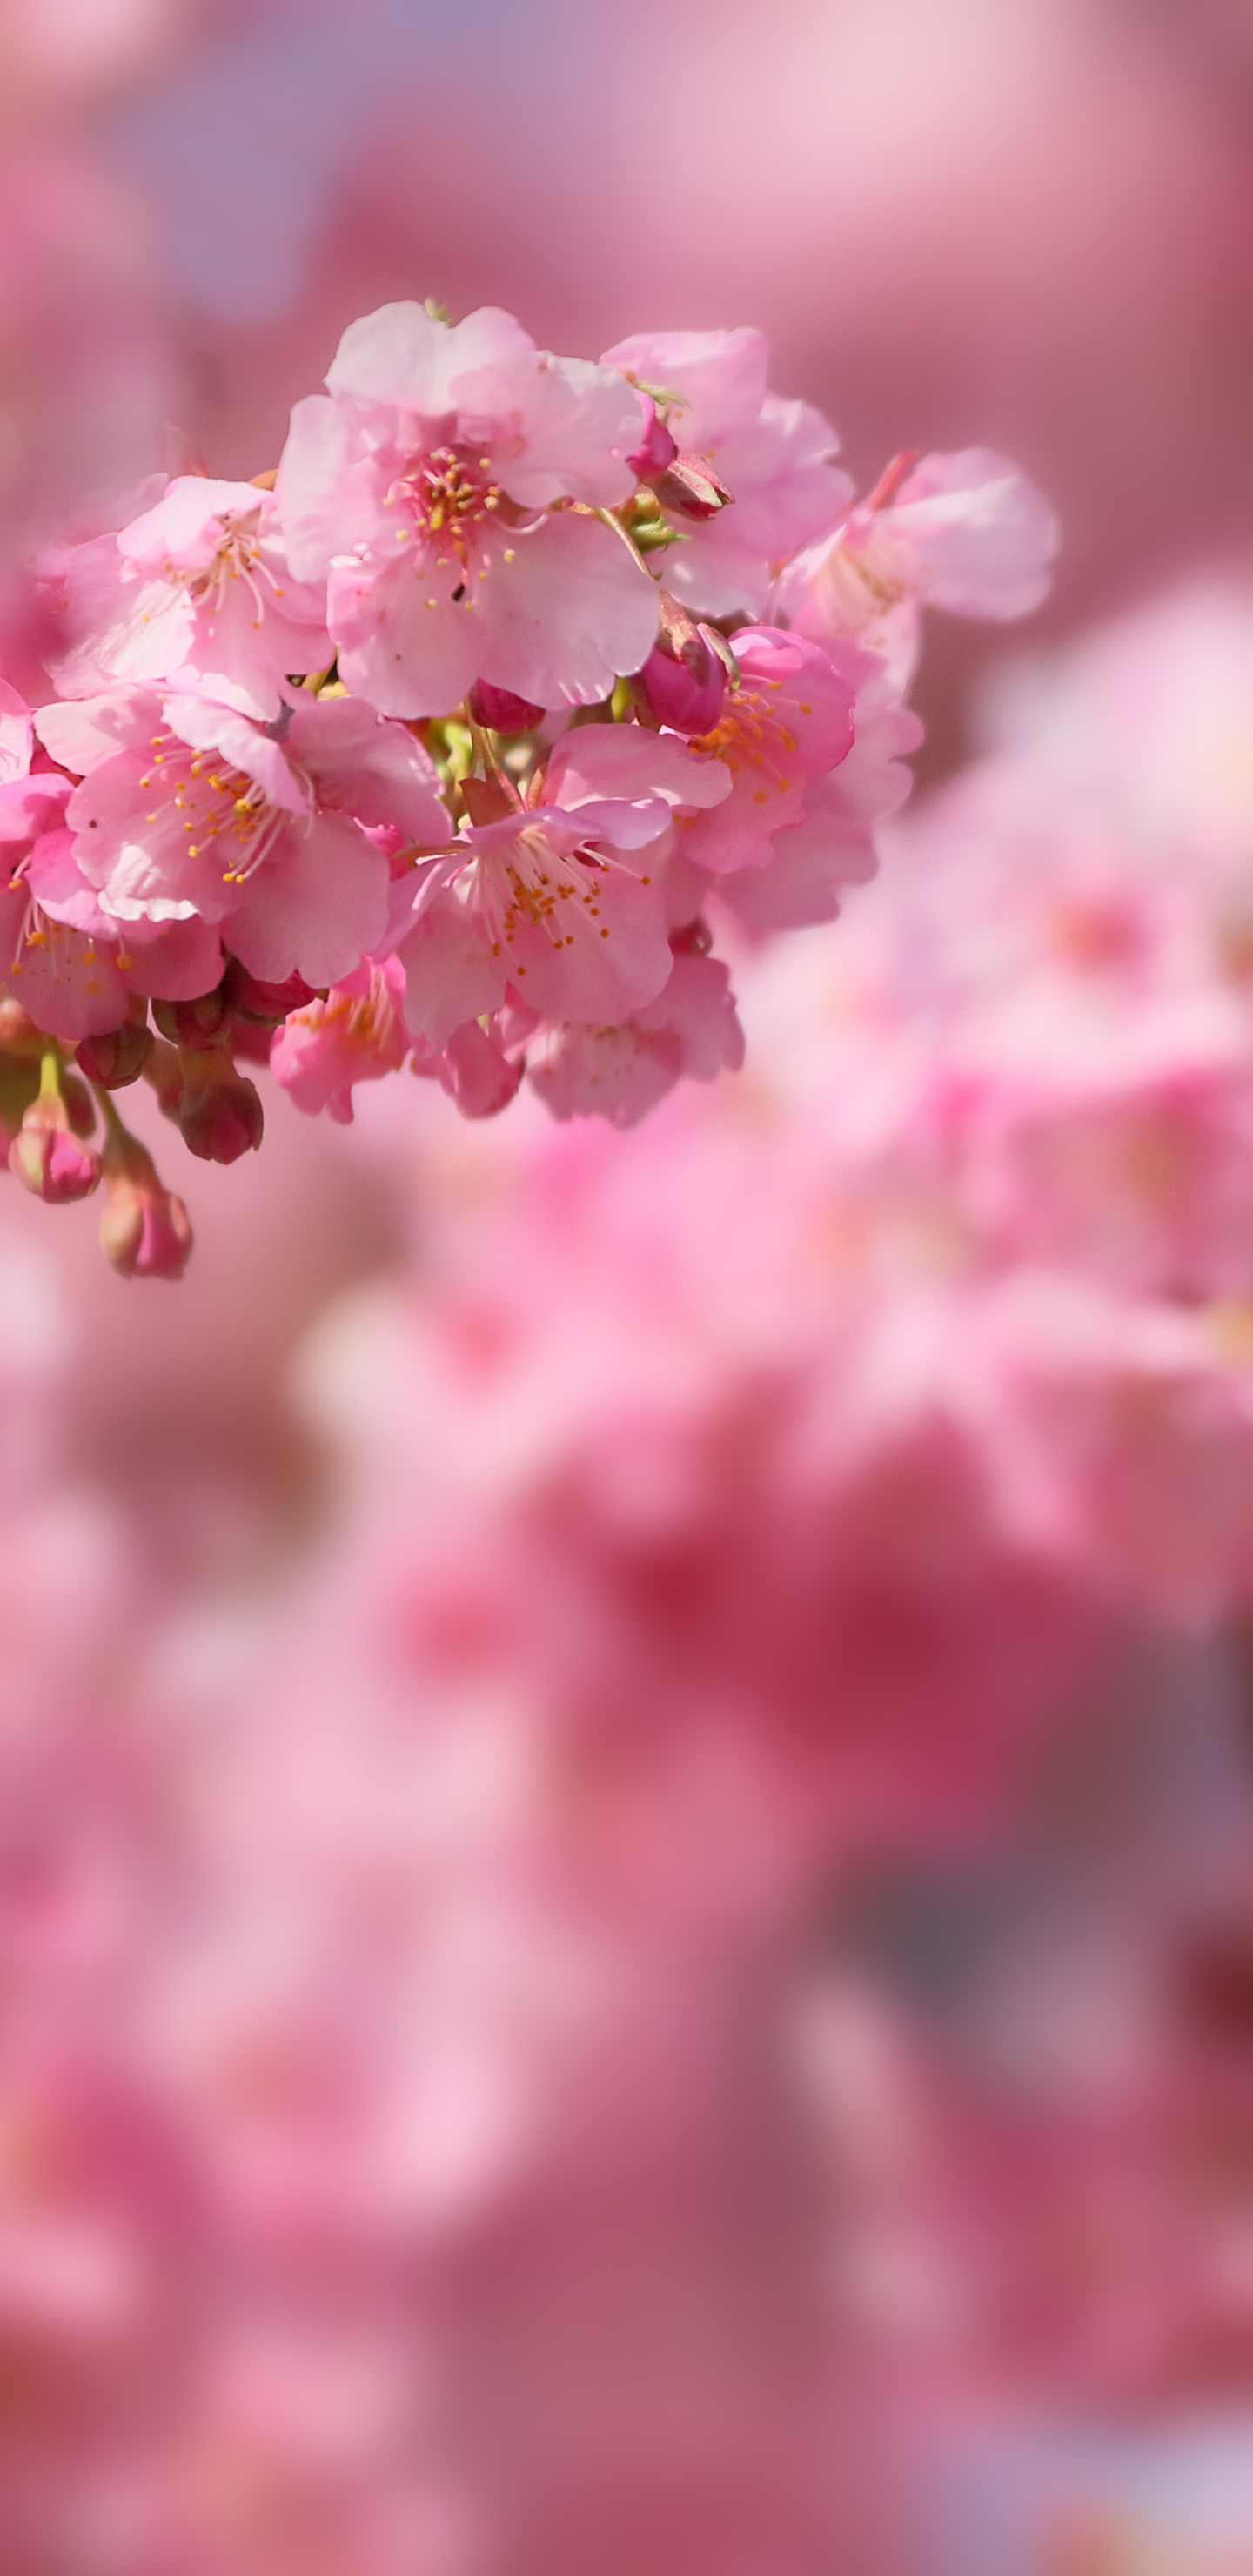 Handy-Wallpaper Natur, Sakura, Japan, Frühling, Blüte, Kirschblüte, Erde/natur kostenlos herunterladen.